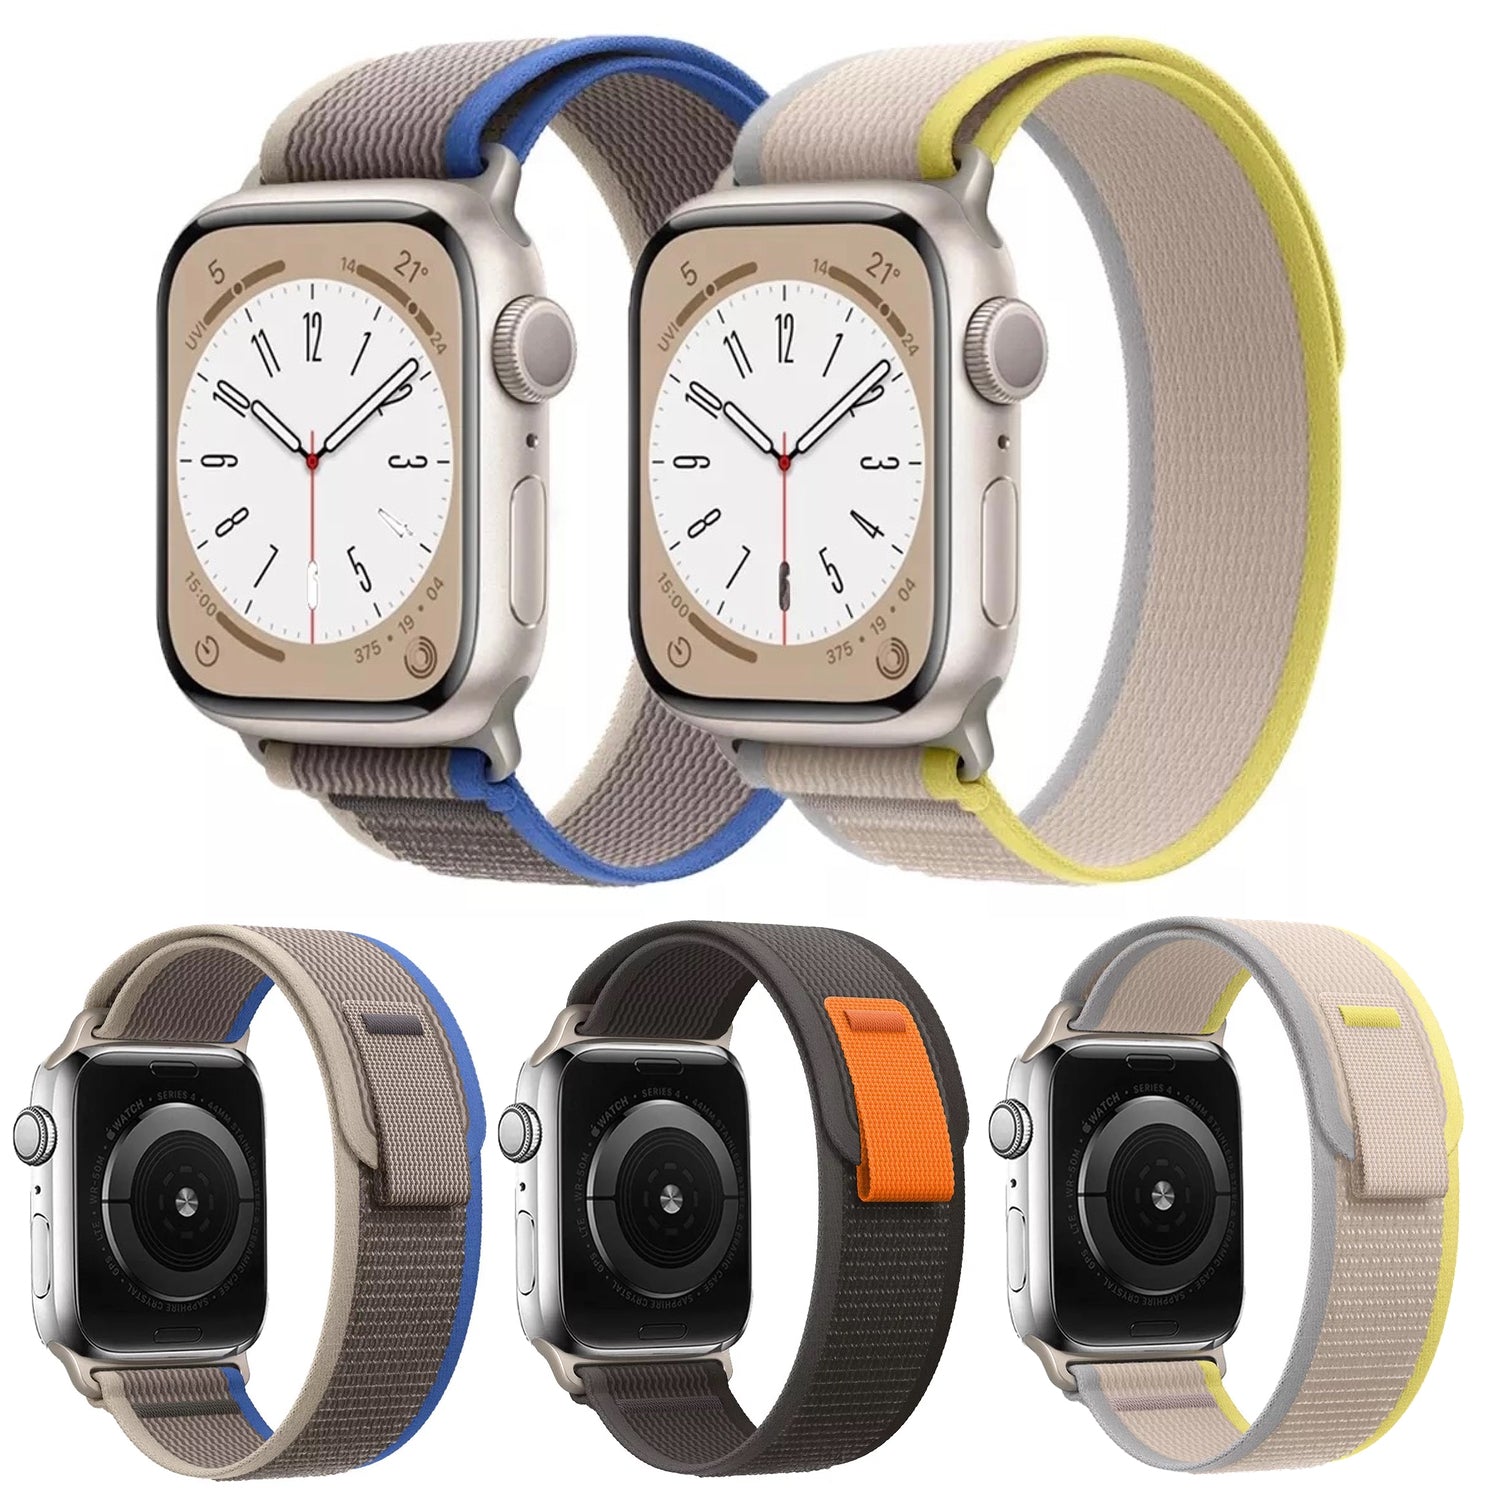 Trail Loop Armband für Apple Watch